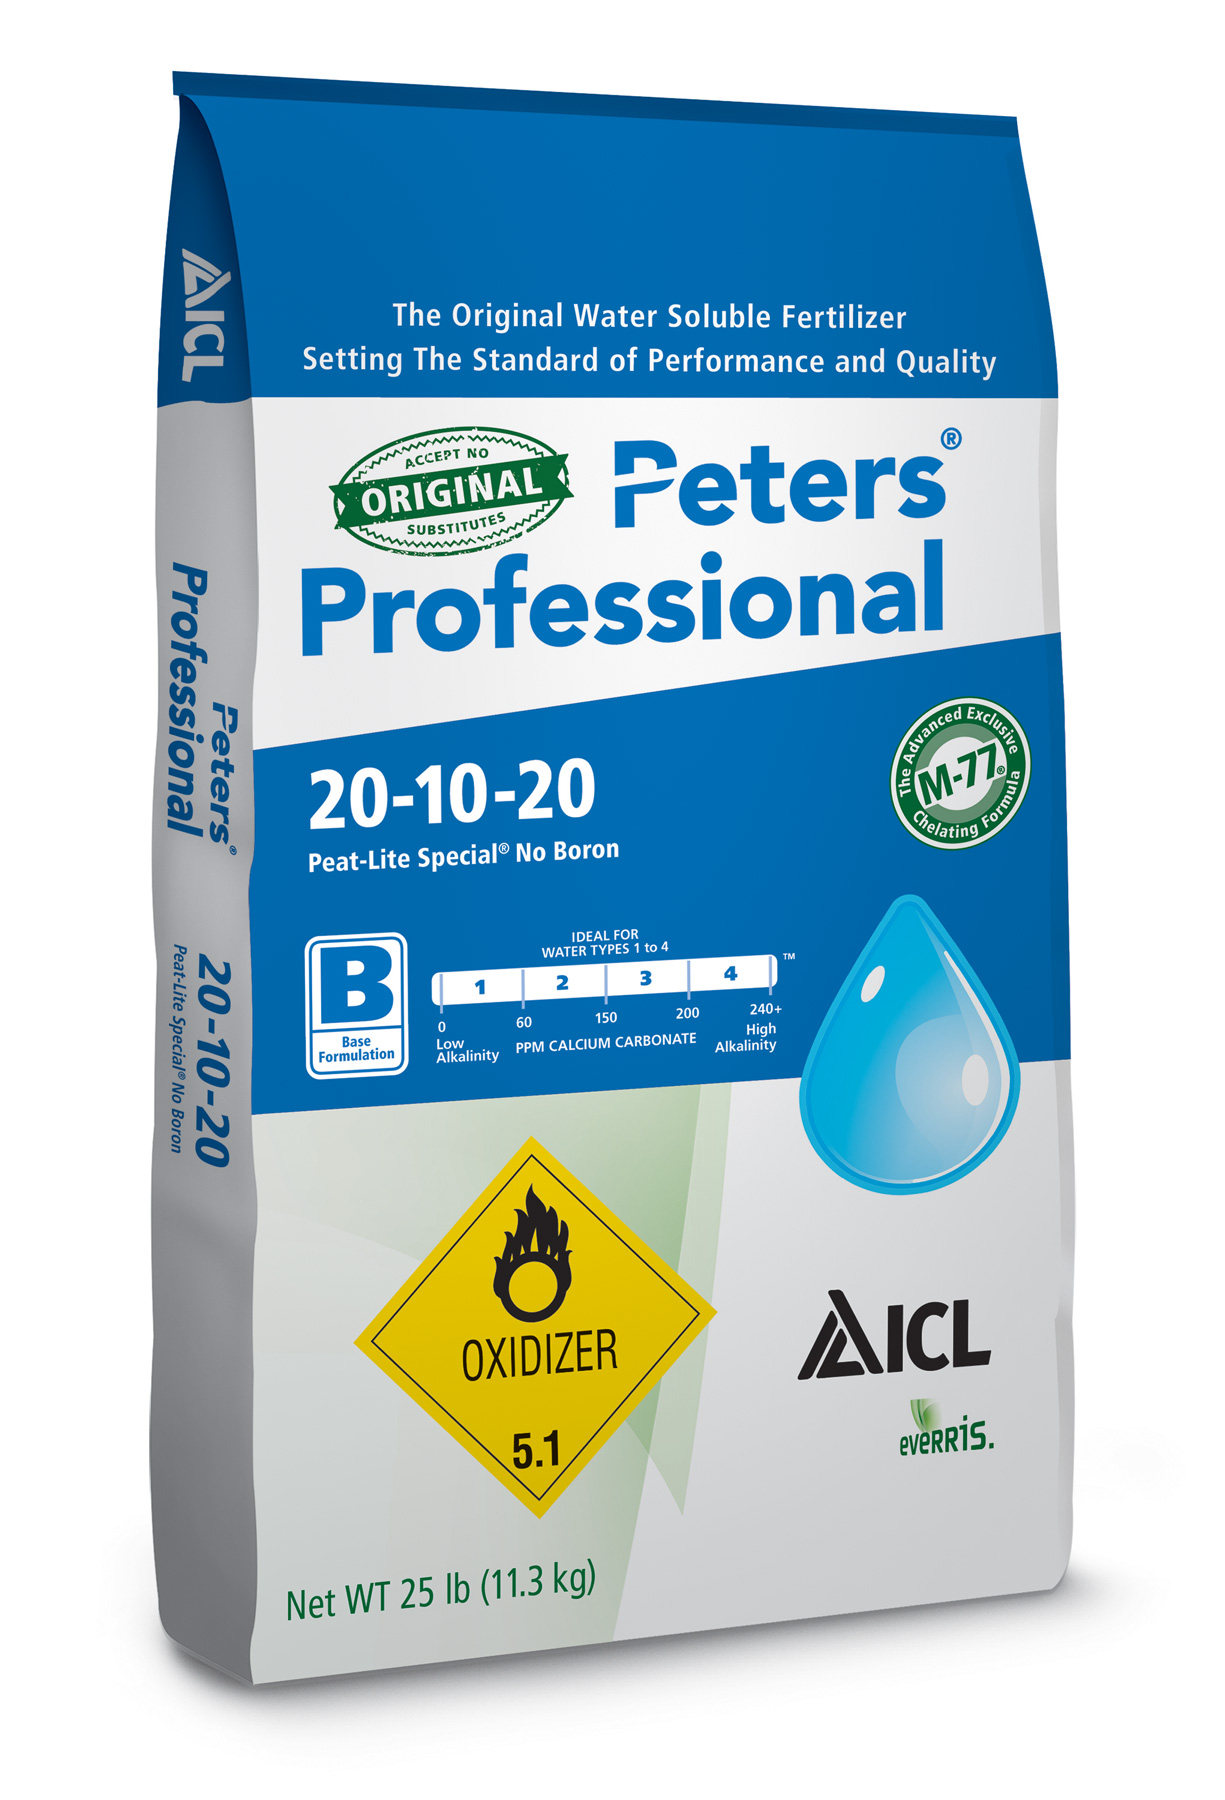 Peters Professional 20-10-20 Peat-Lite Special No Boron 25 lb Bag - Water Soluble Fertilizer